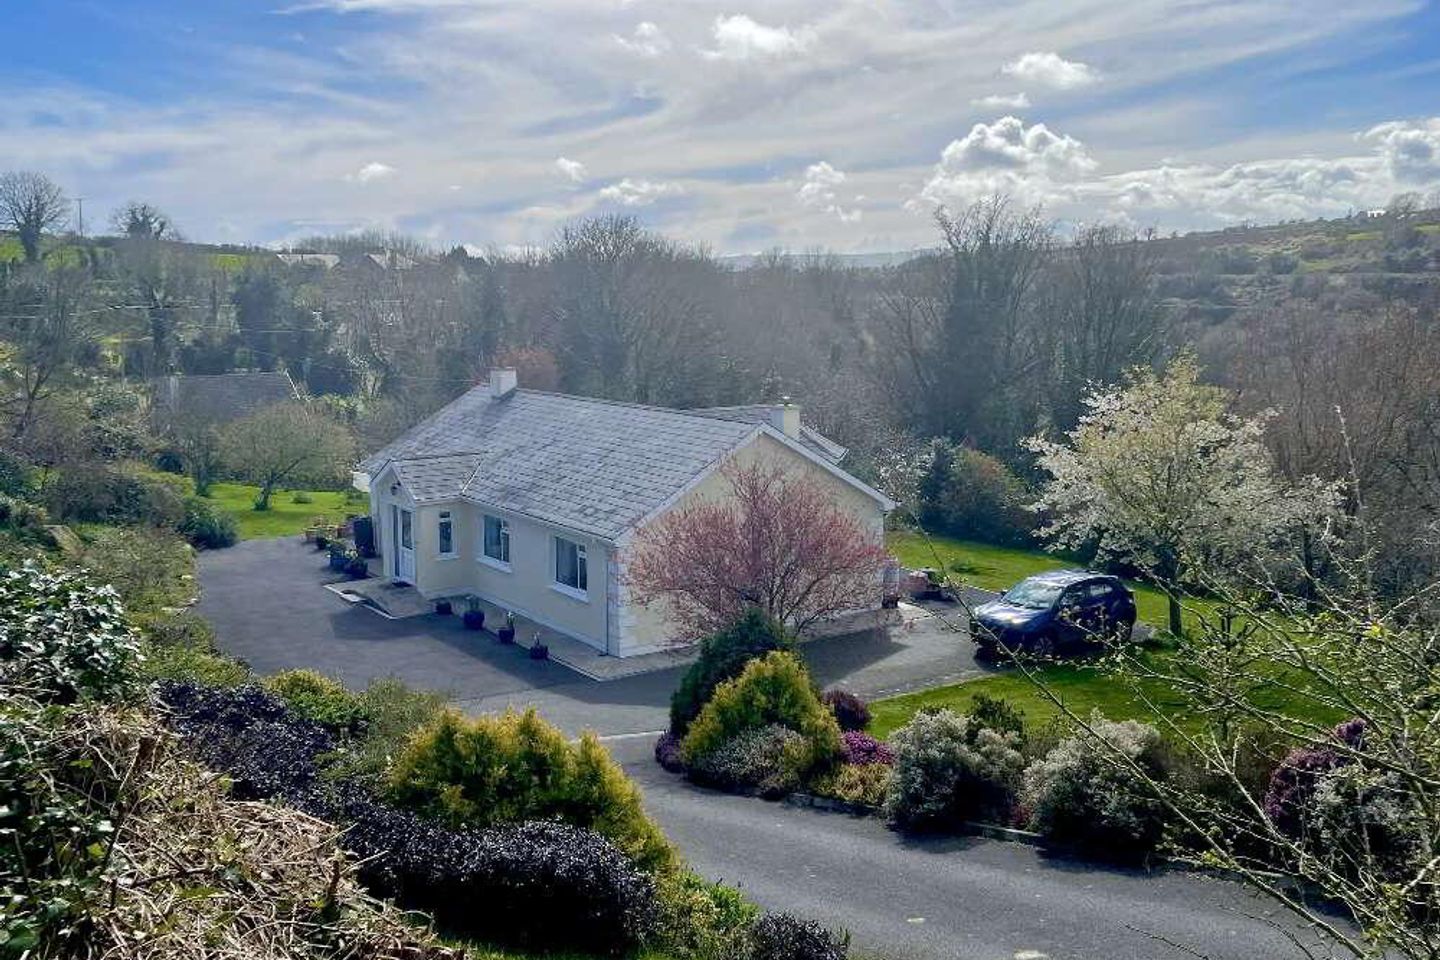 Glen View, Ballyvoile, Stradbally, Co. Waterford, X42NY30